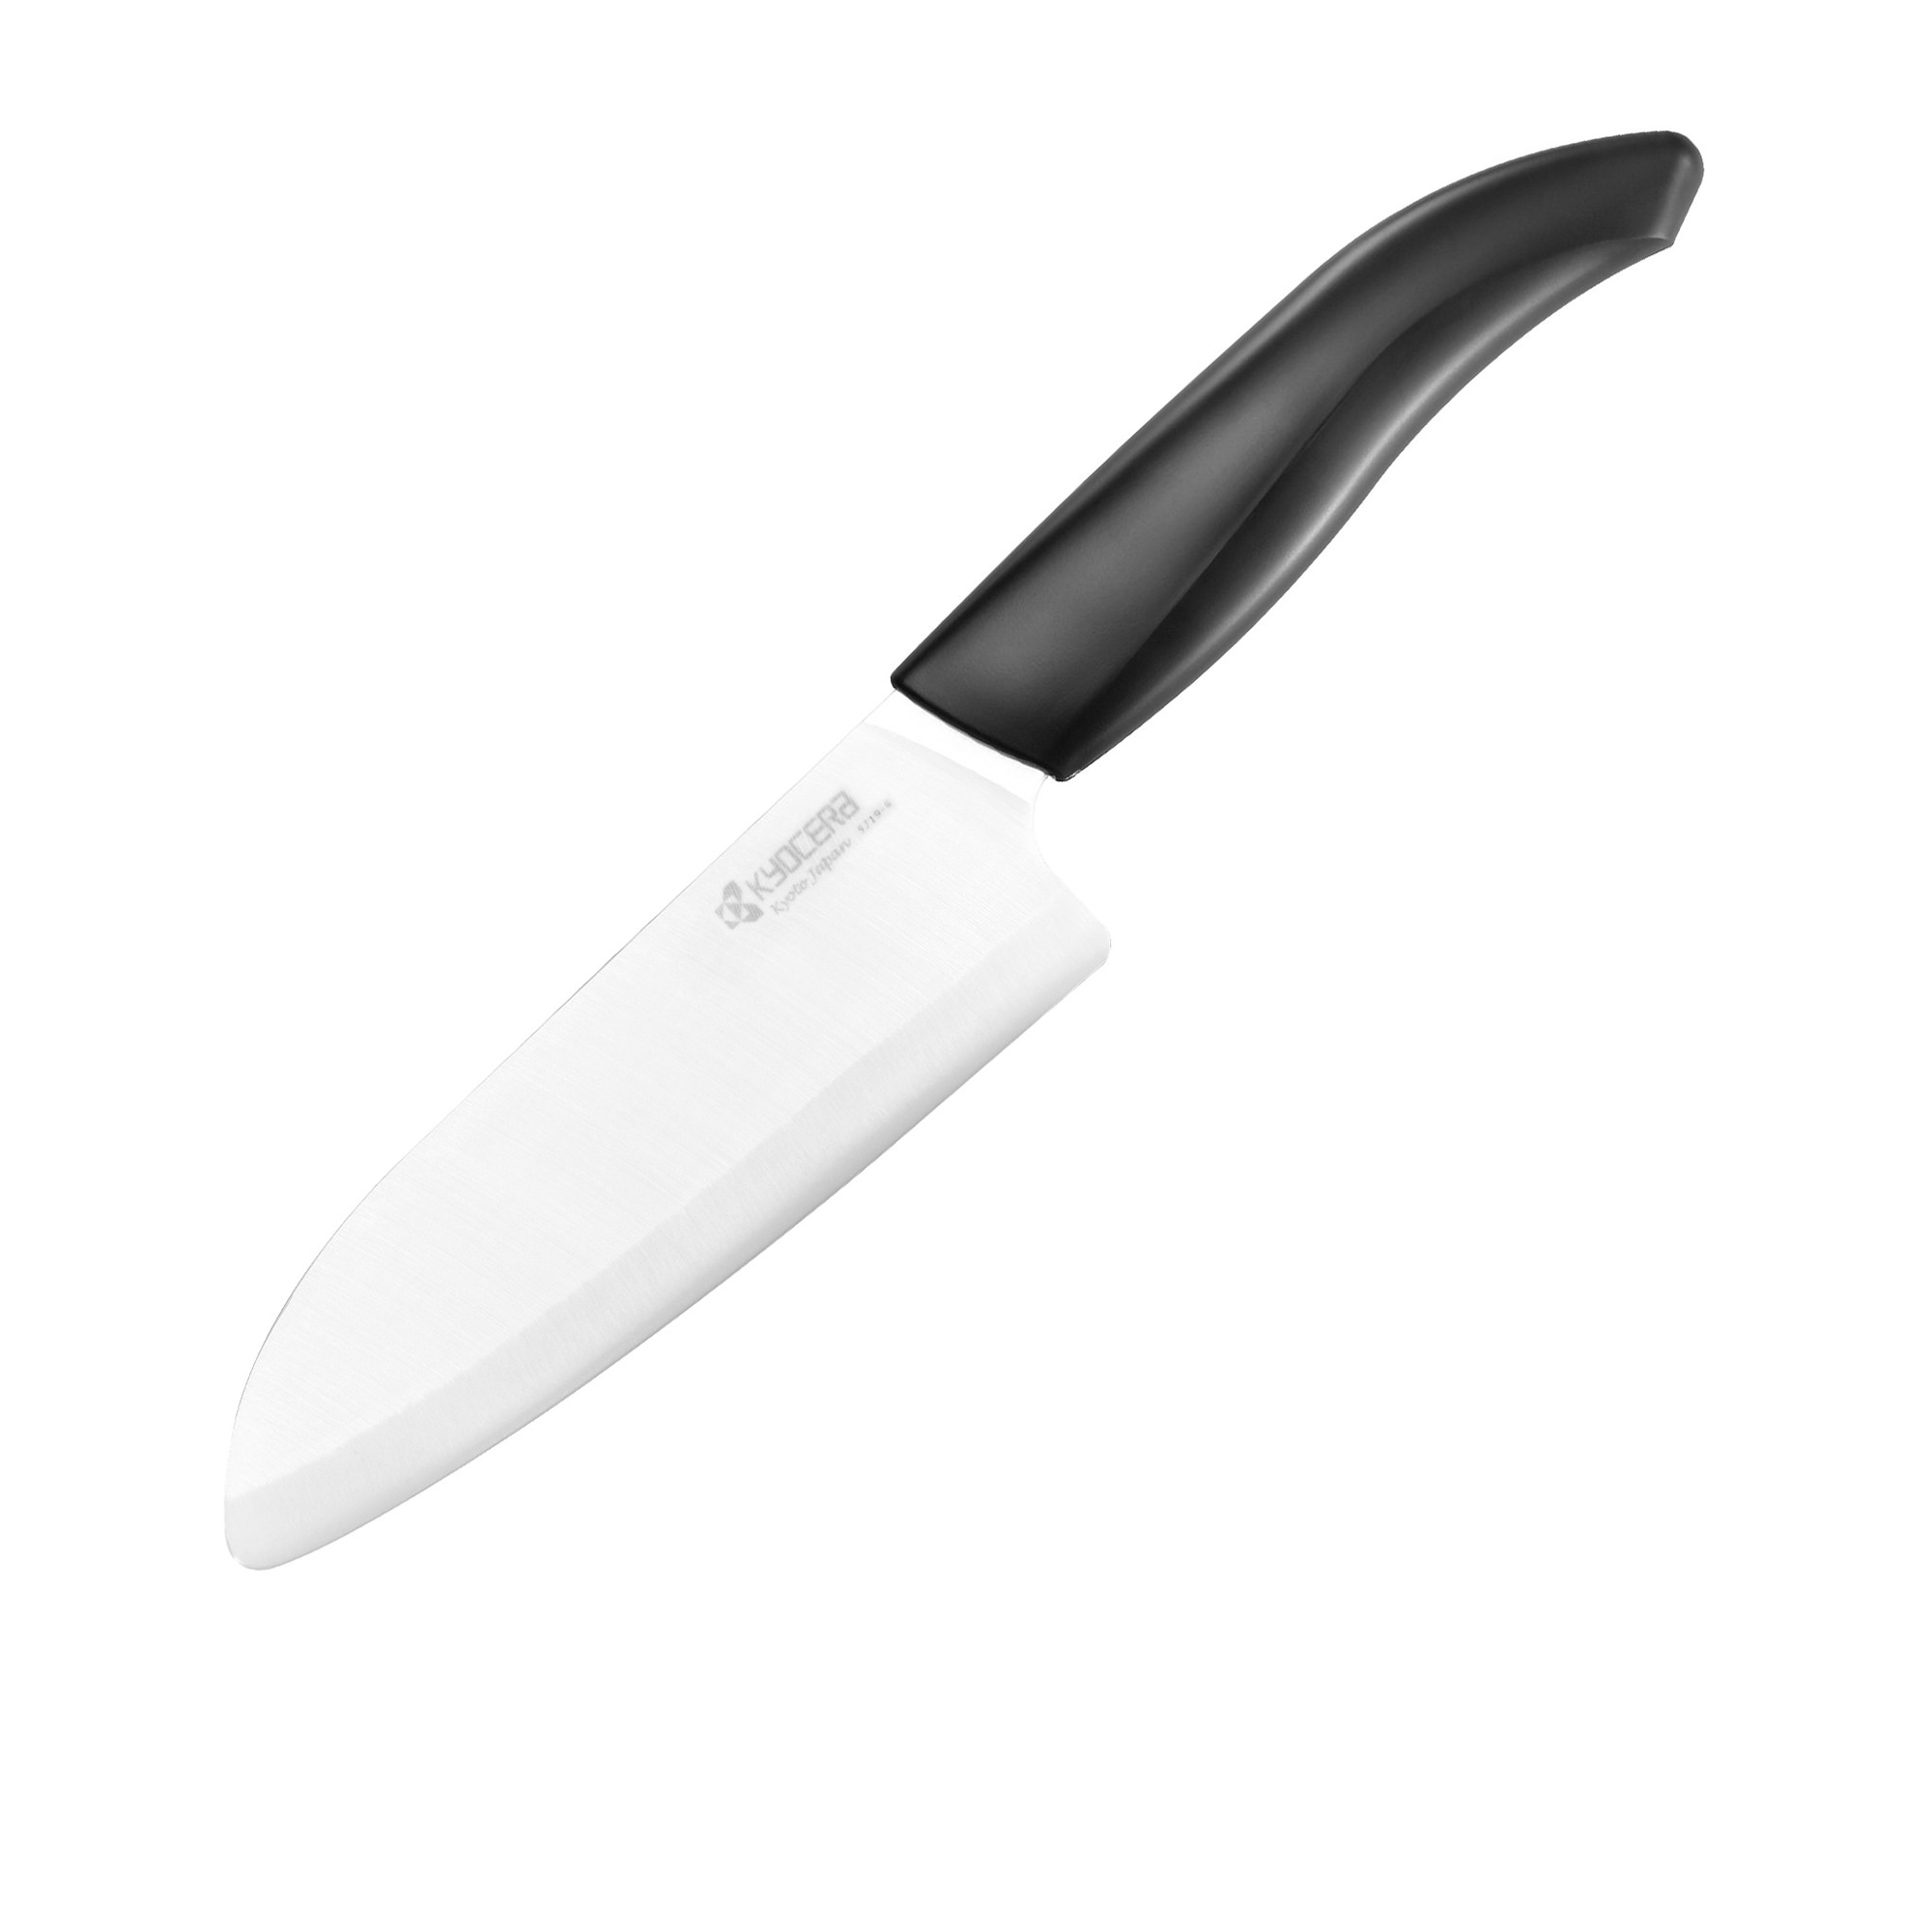 Kyocera Ceramic Santoku Knife with Peeler Black Image 1